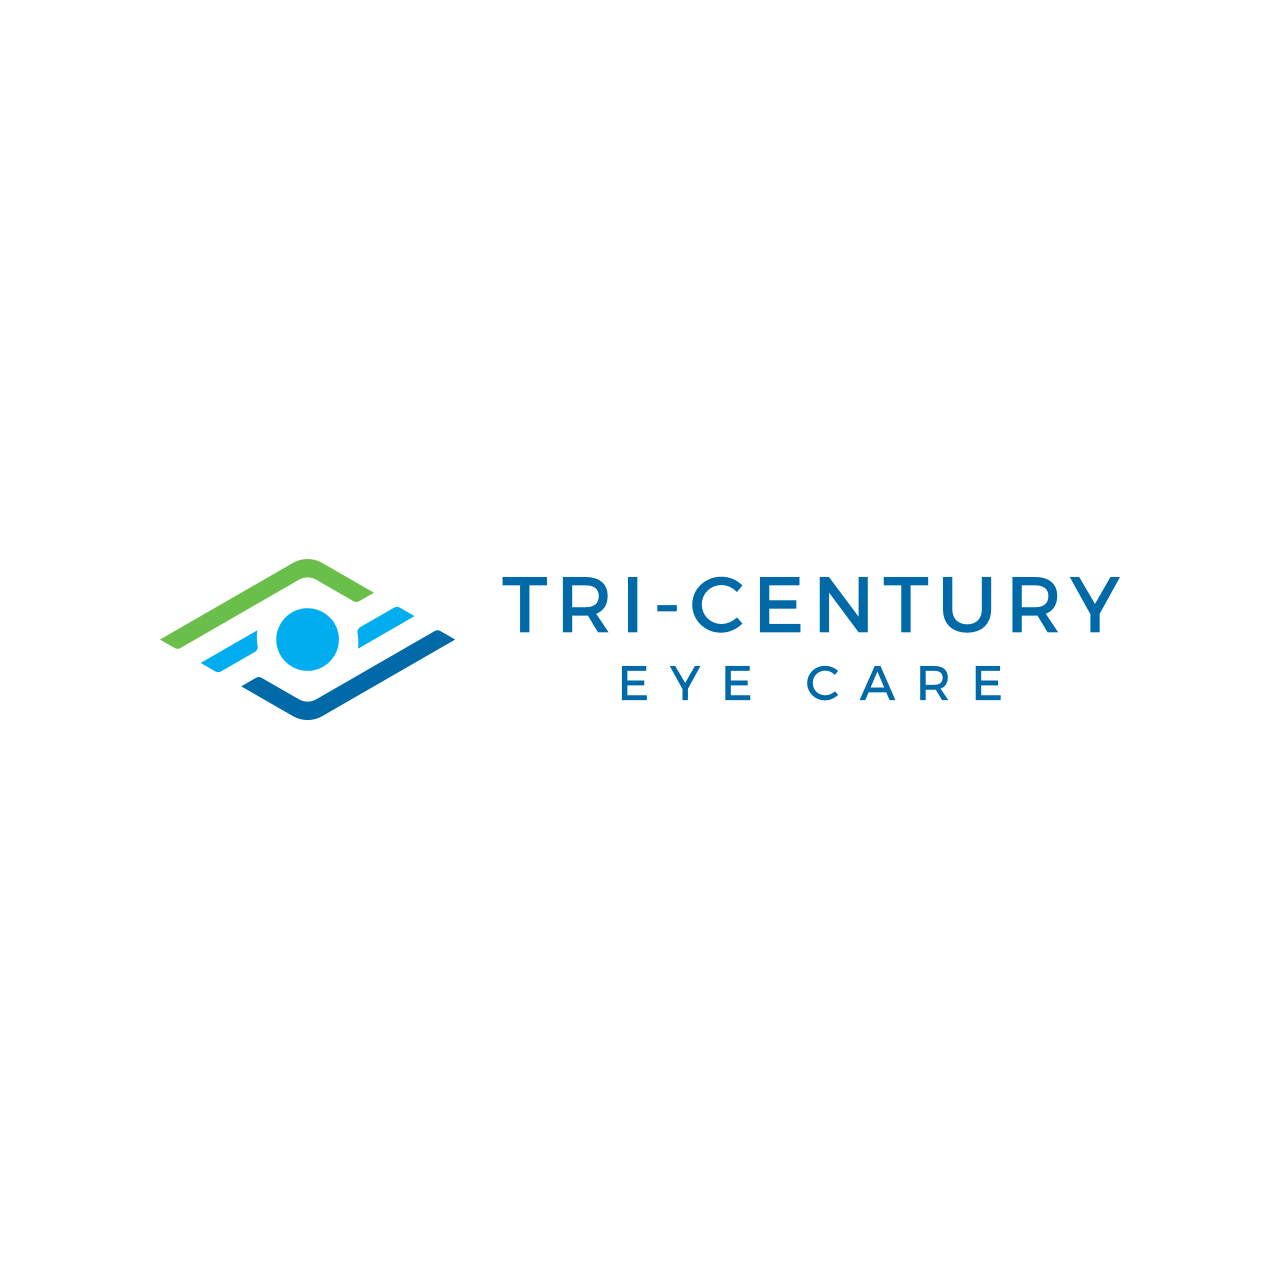 Tri-century Eye Care